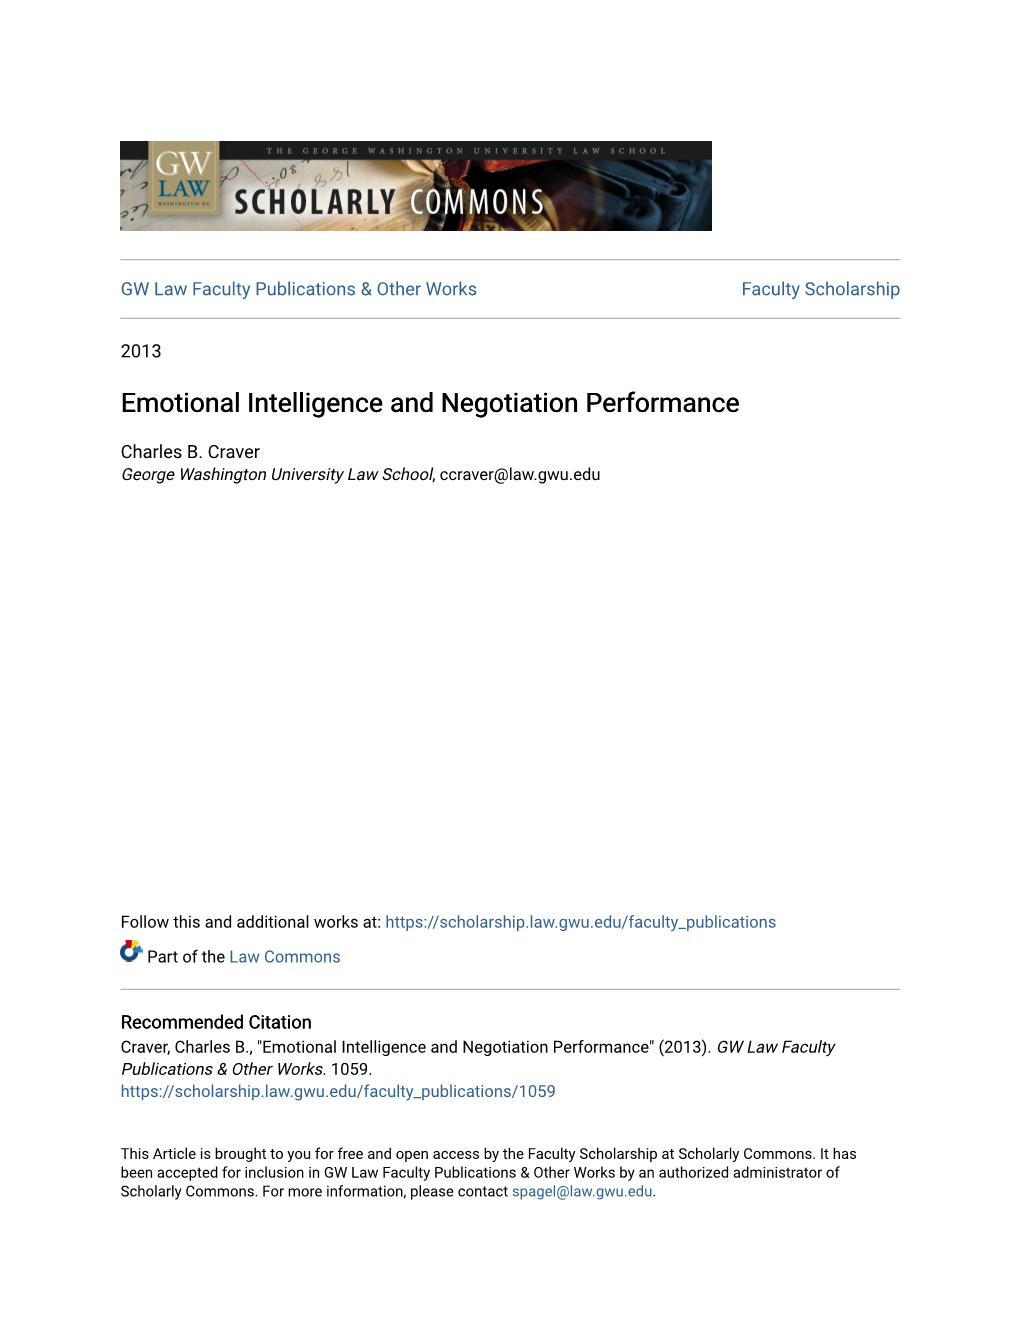 Emotional Intelligence and Negotiation Performance